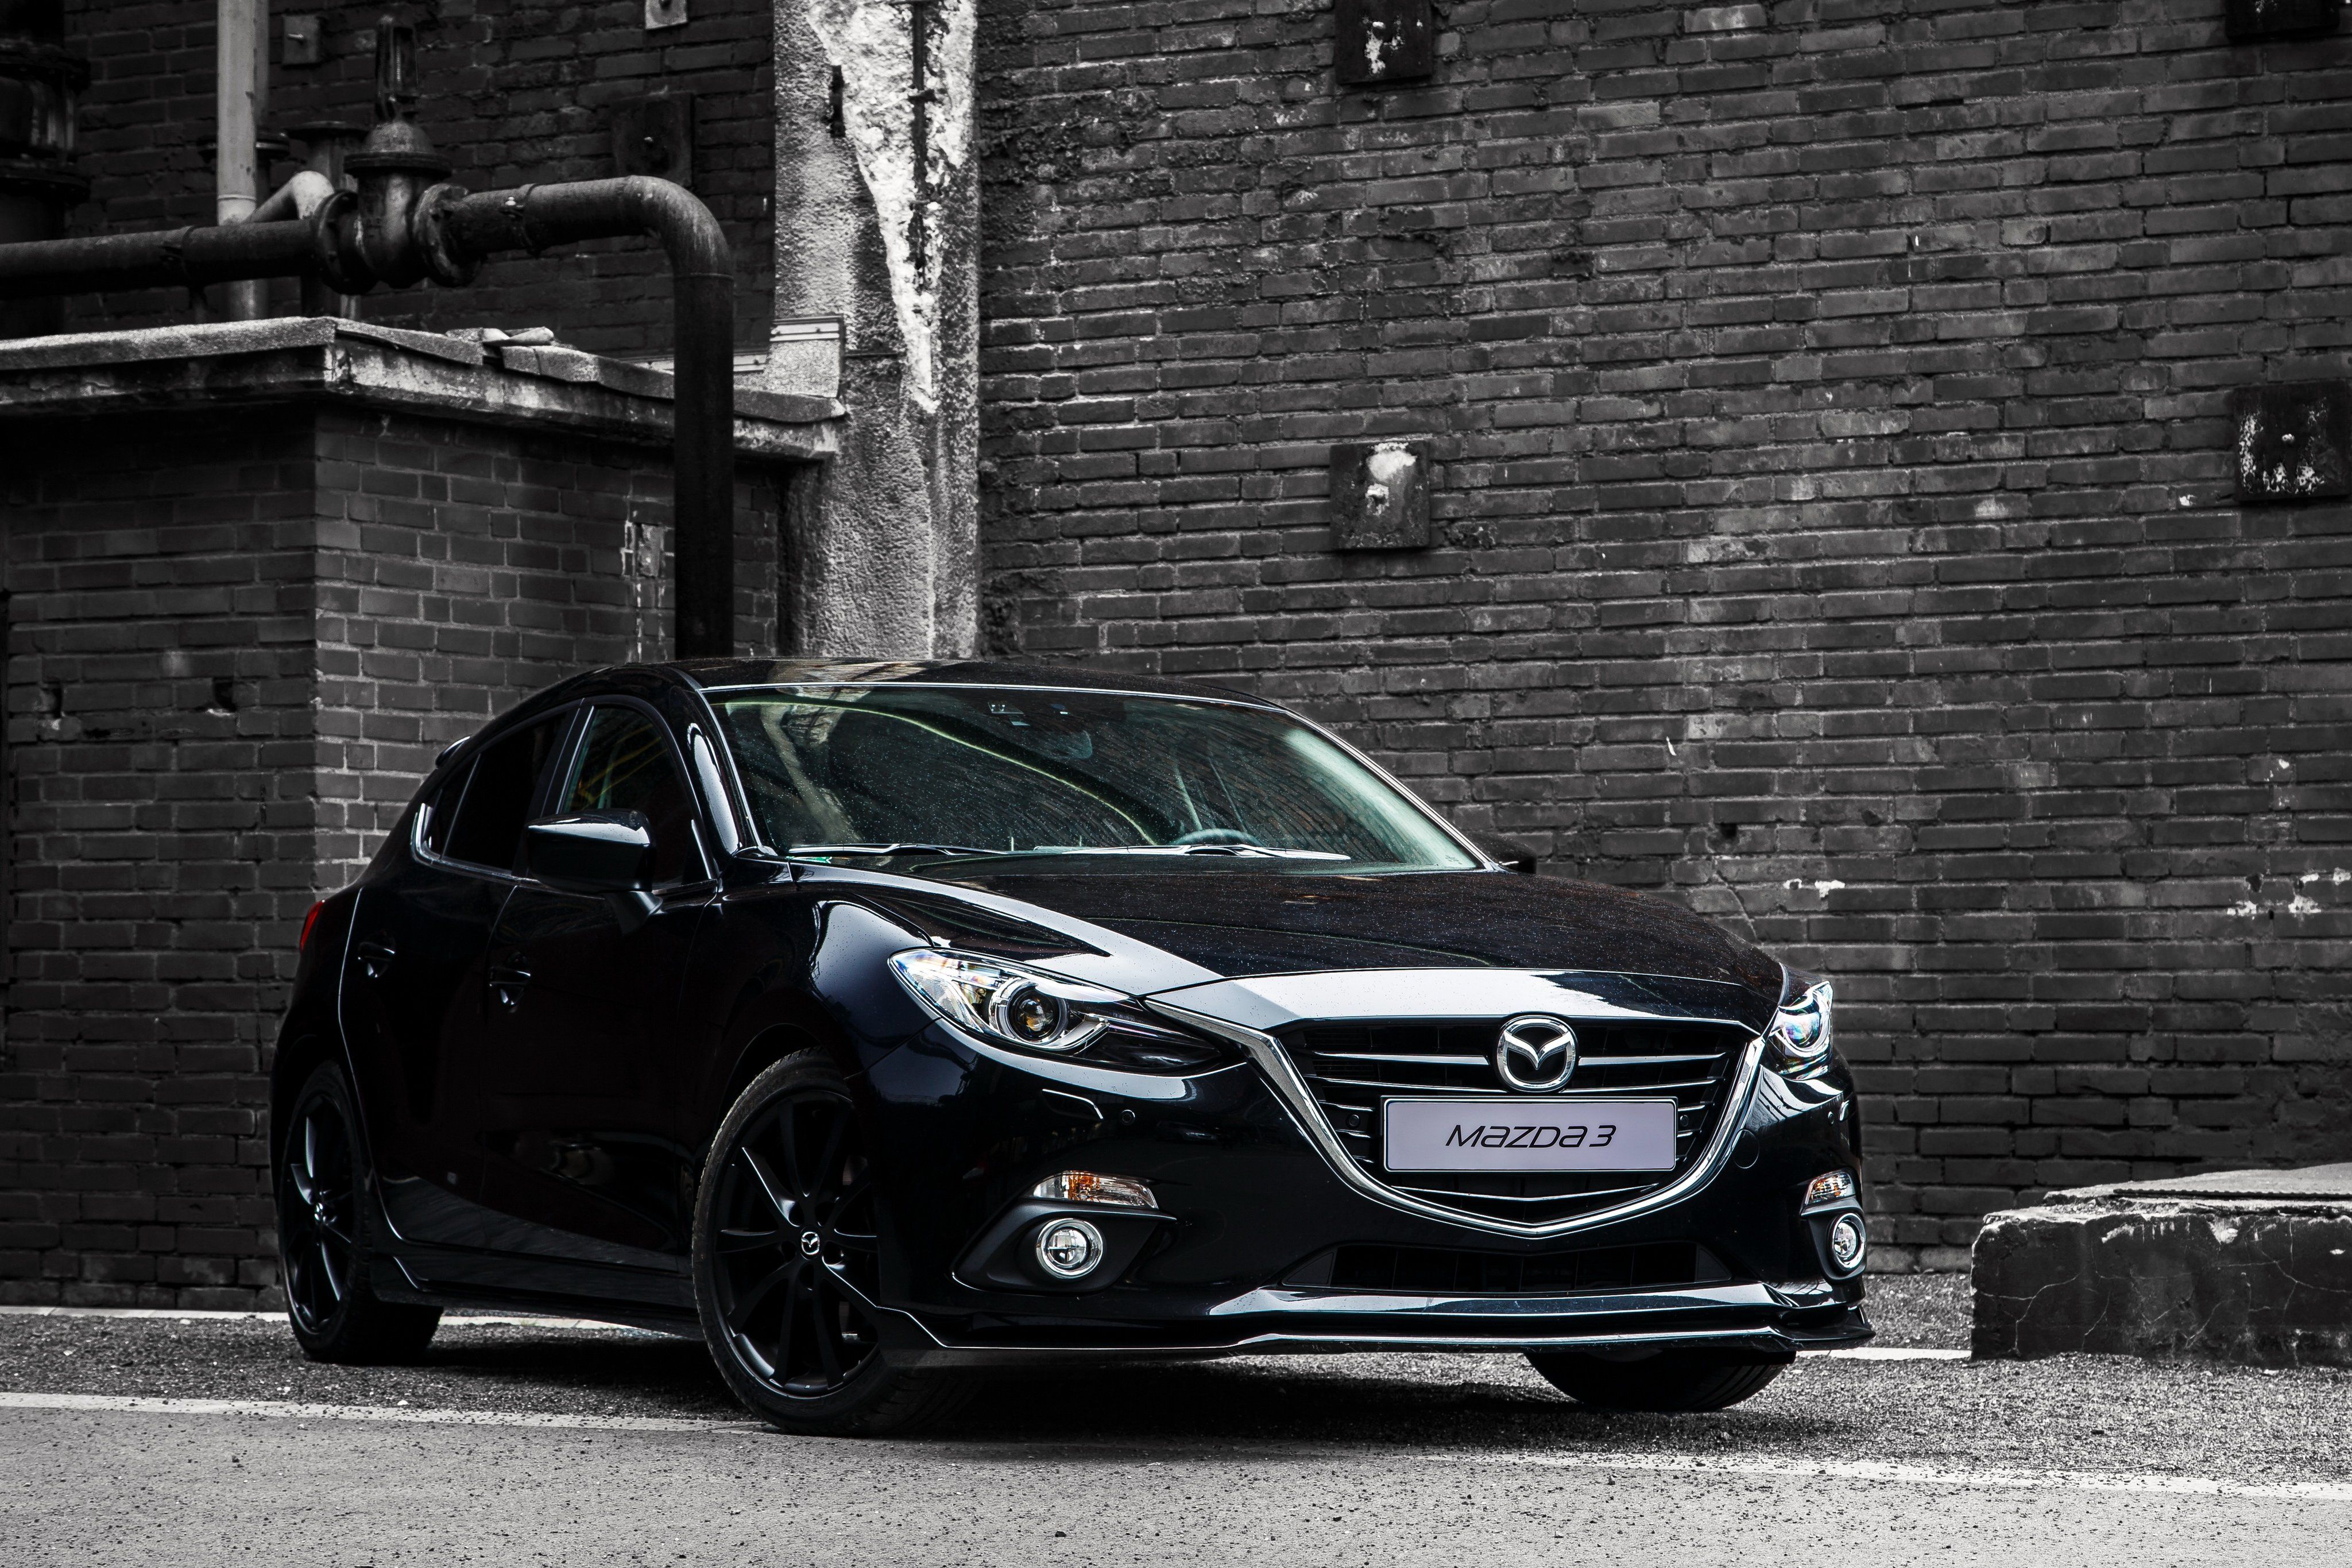 Mazda Black, Limited, B m, Mazda Wallpaper HD / Desktop and Mobile Background